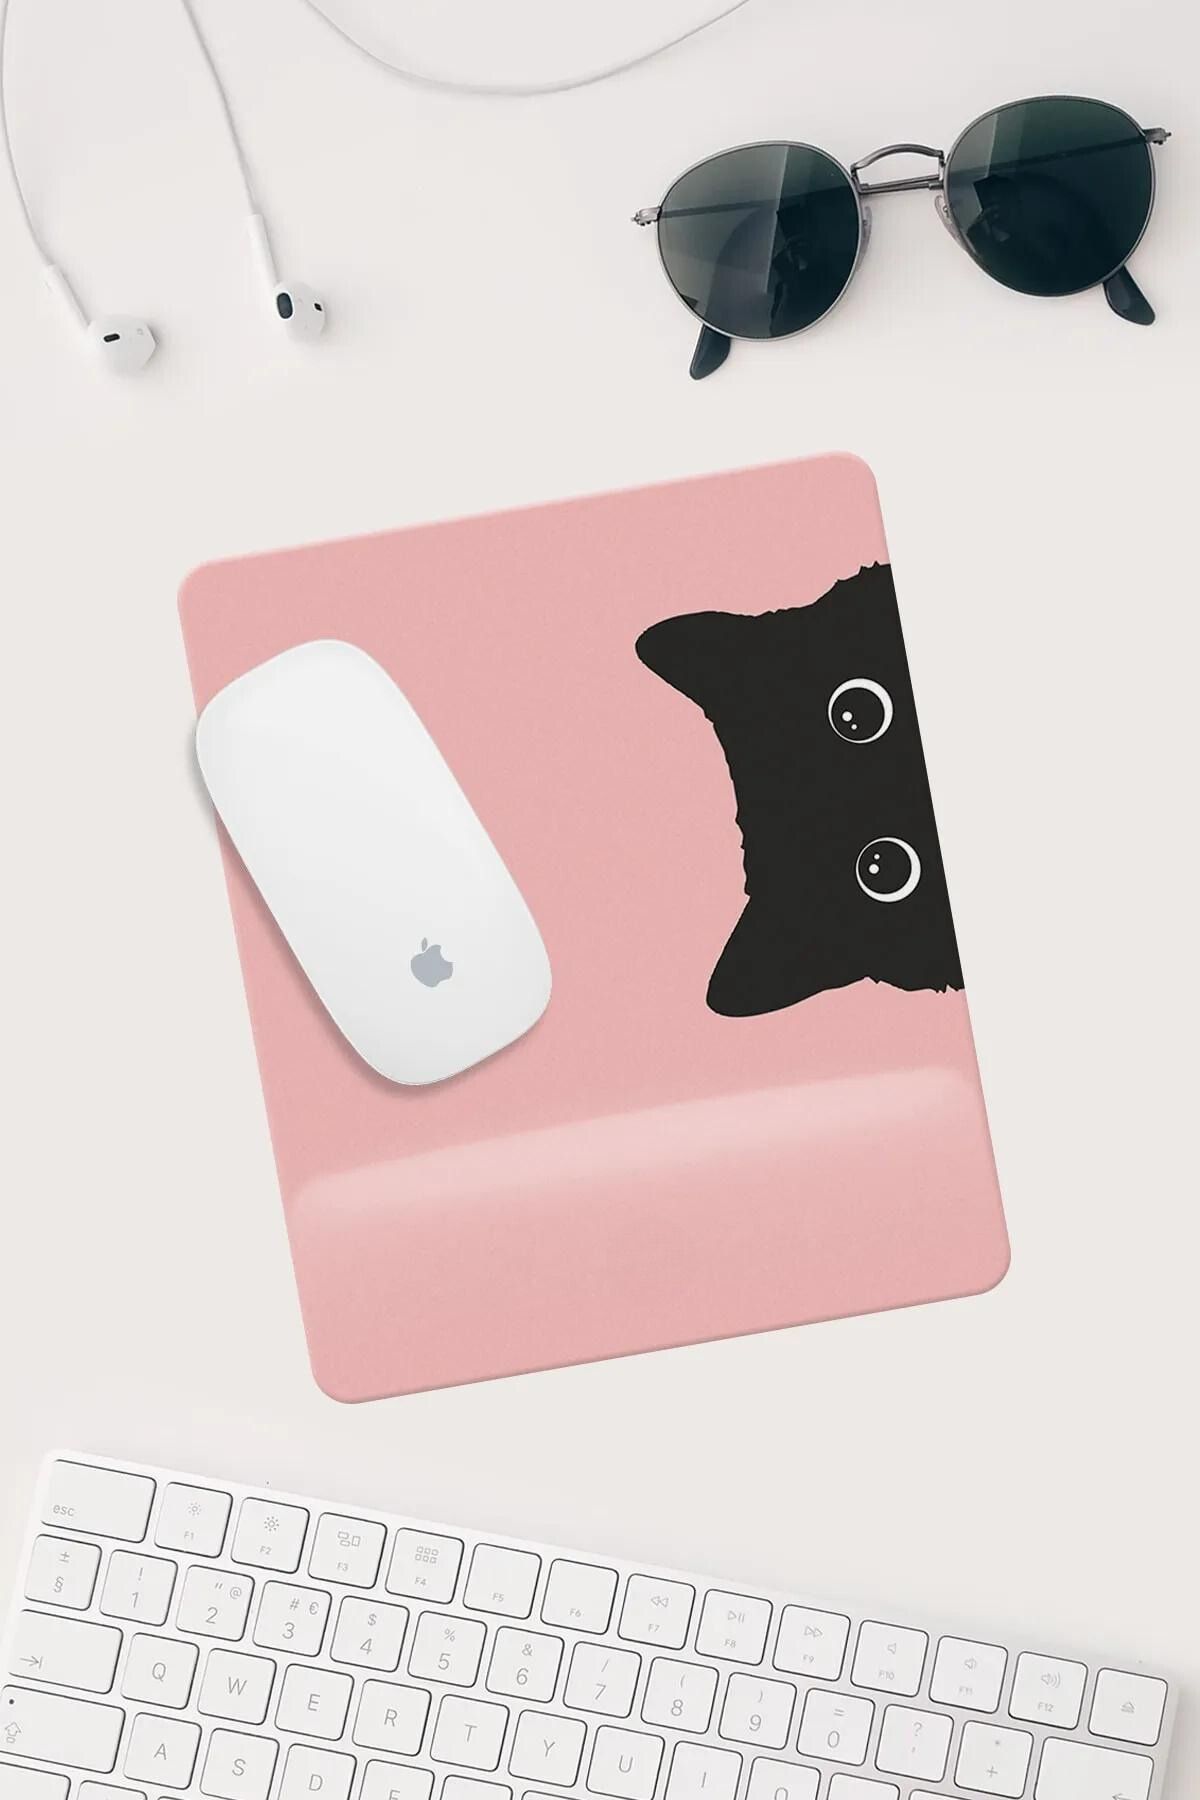 HobiShop Pembe Kedi Çizimli Bilek Destekli Dikdörtgen Mouse Pad Mouse Altlığı.